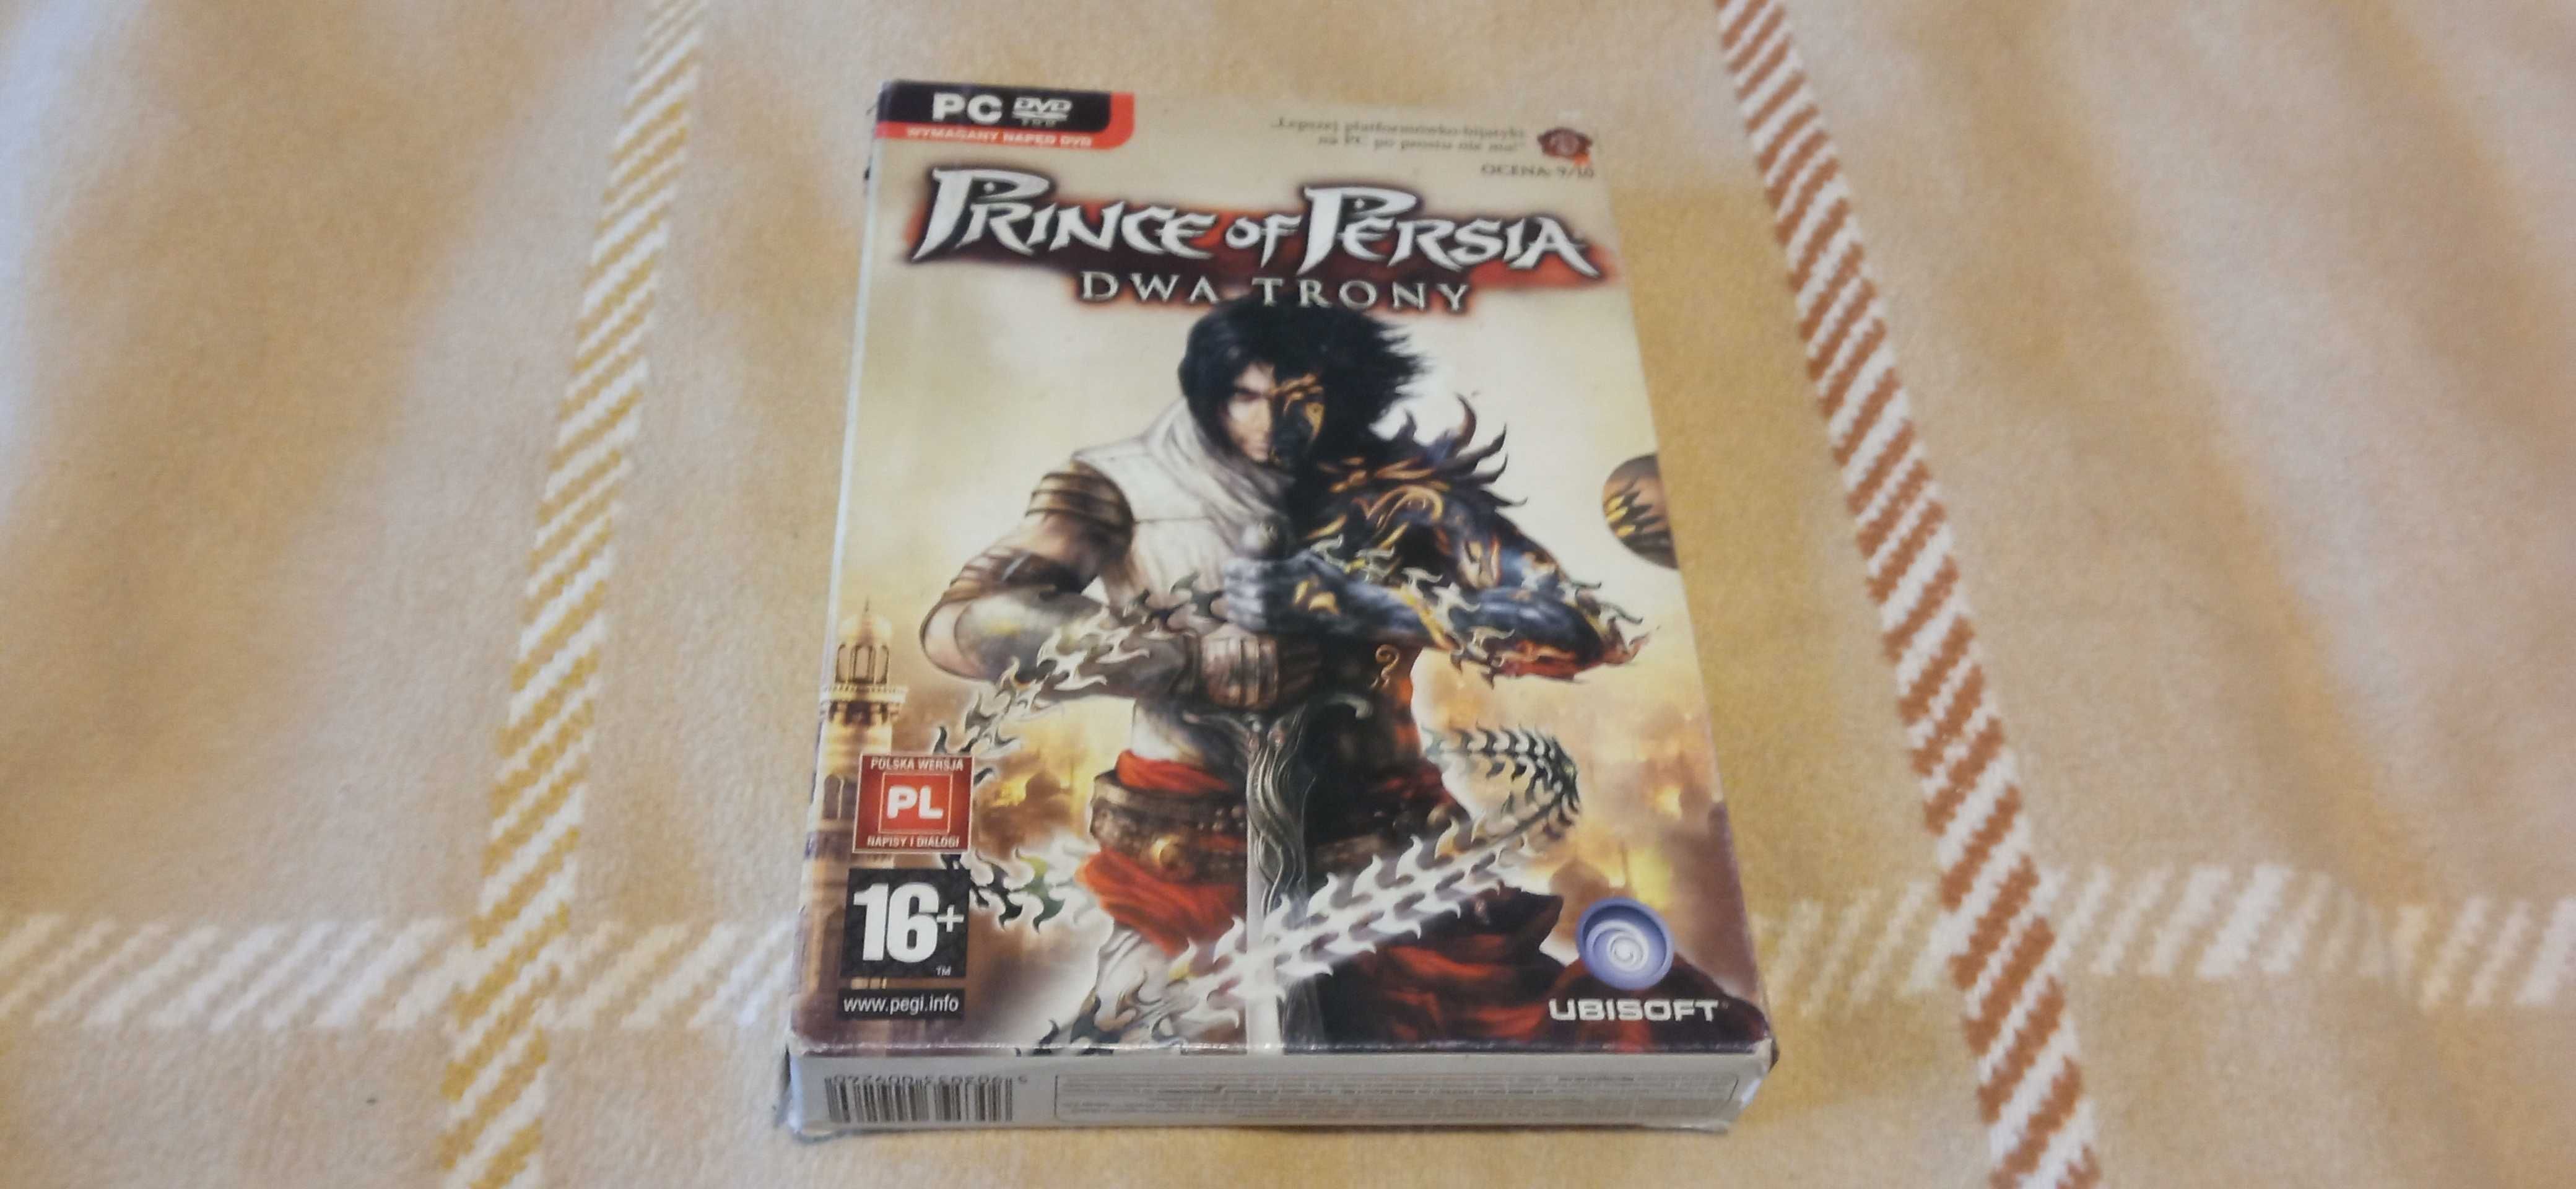 Prince of Persia Dwa Trony